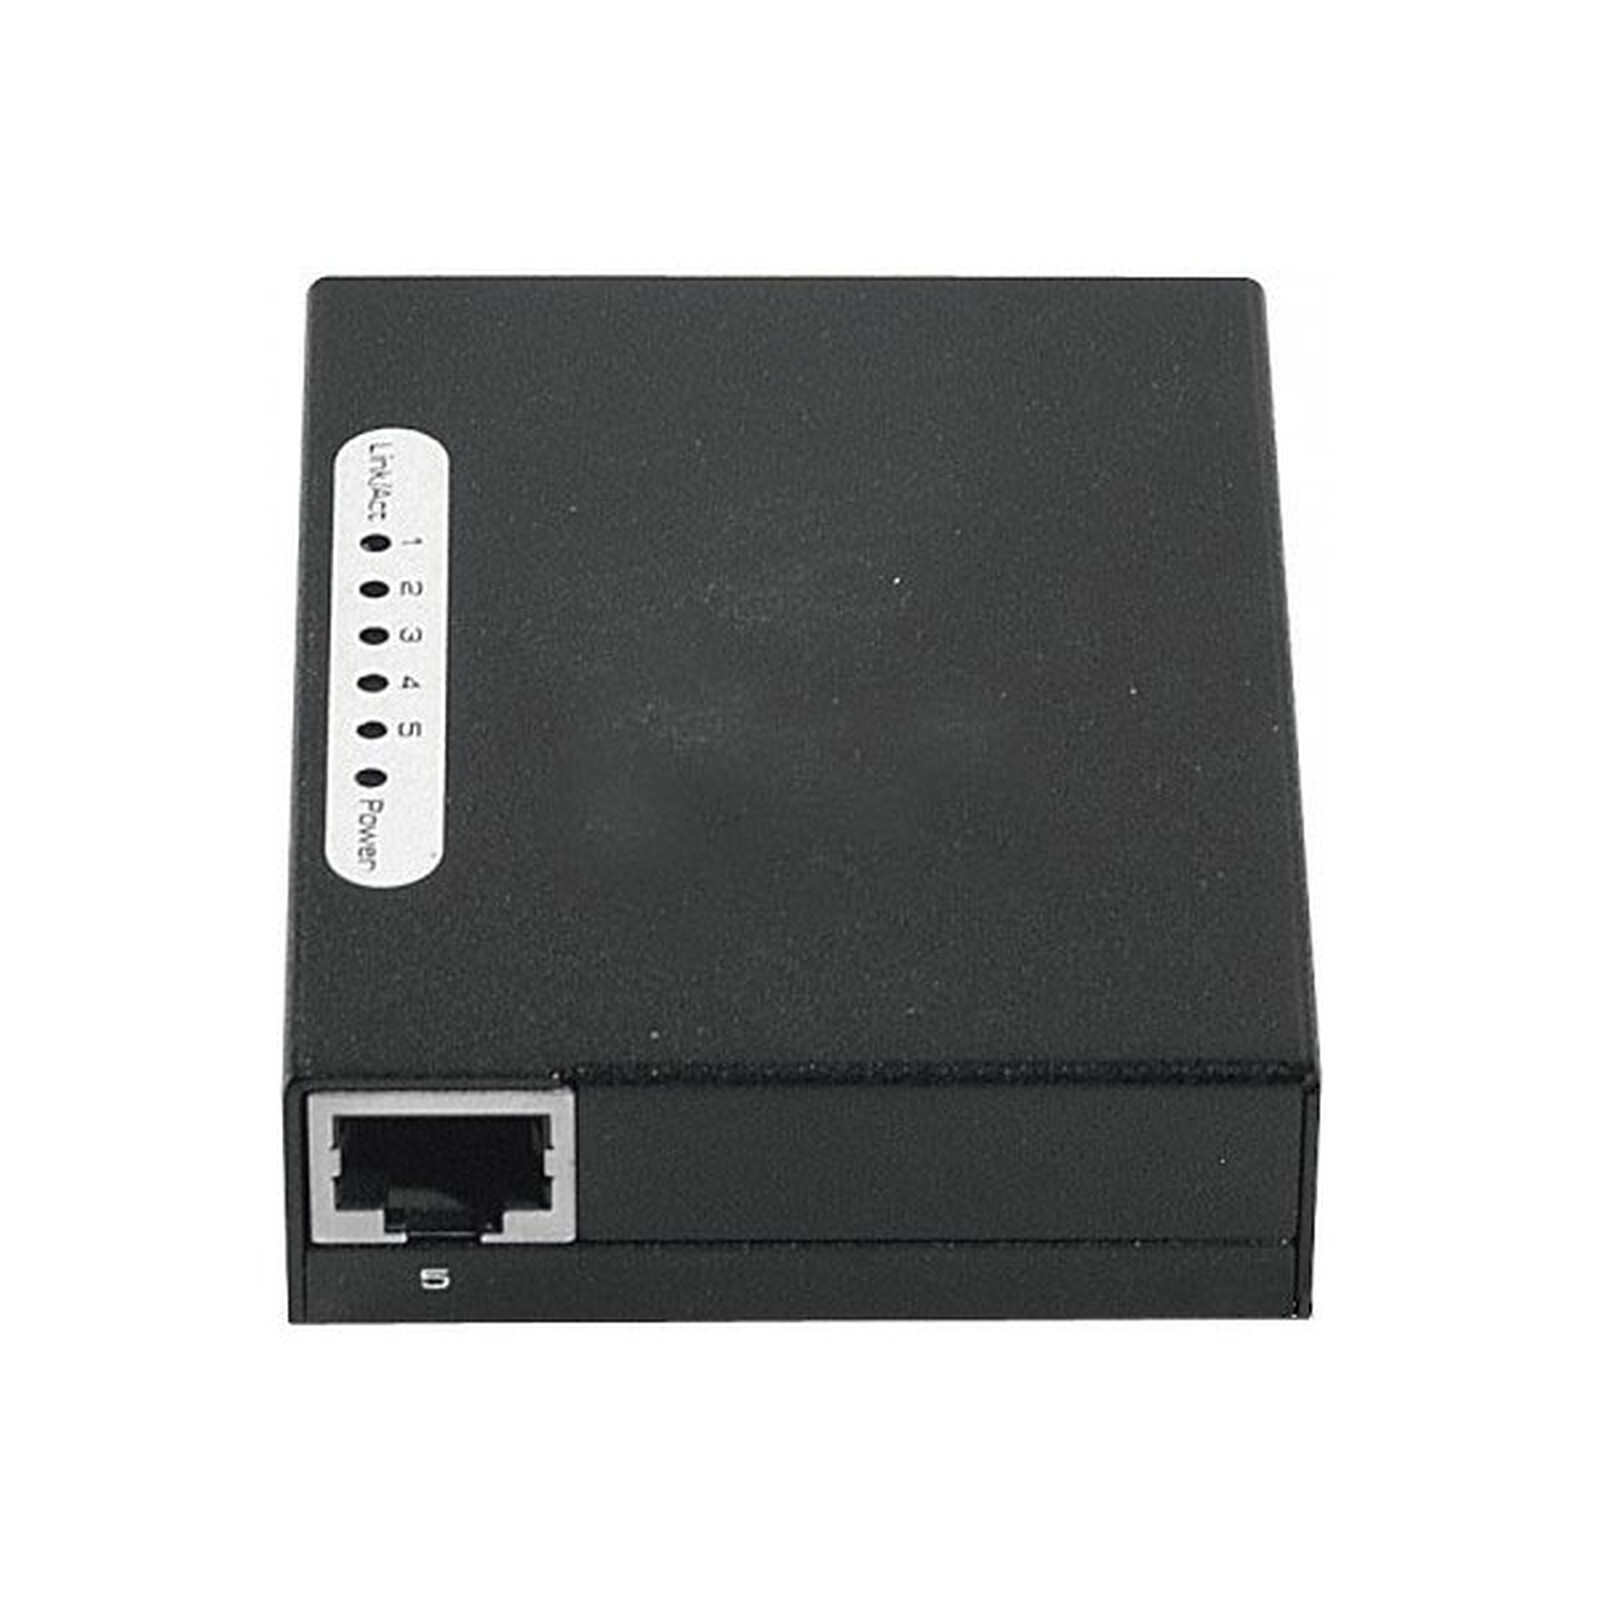 Multiprise Ethernet RJ45 5 Ports - TL-SF1005D Switch 10/100 Mbps